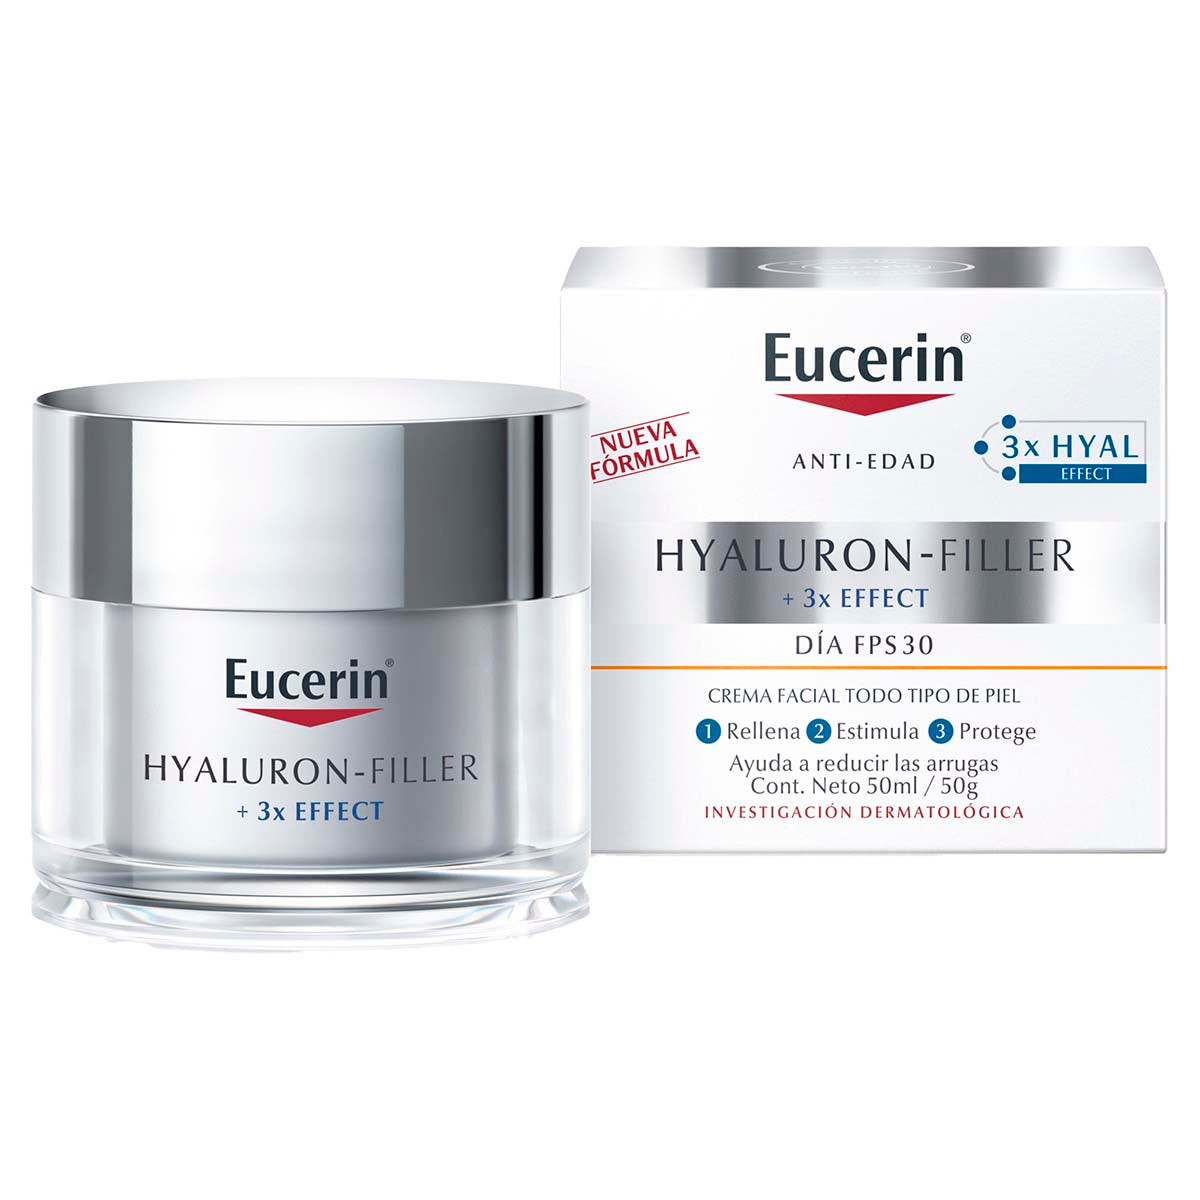 Eucerin hyaluron-filler 3X effect crema facial antiarrugas piel normal dia FPS 30 50ml.